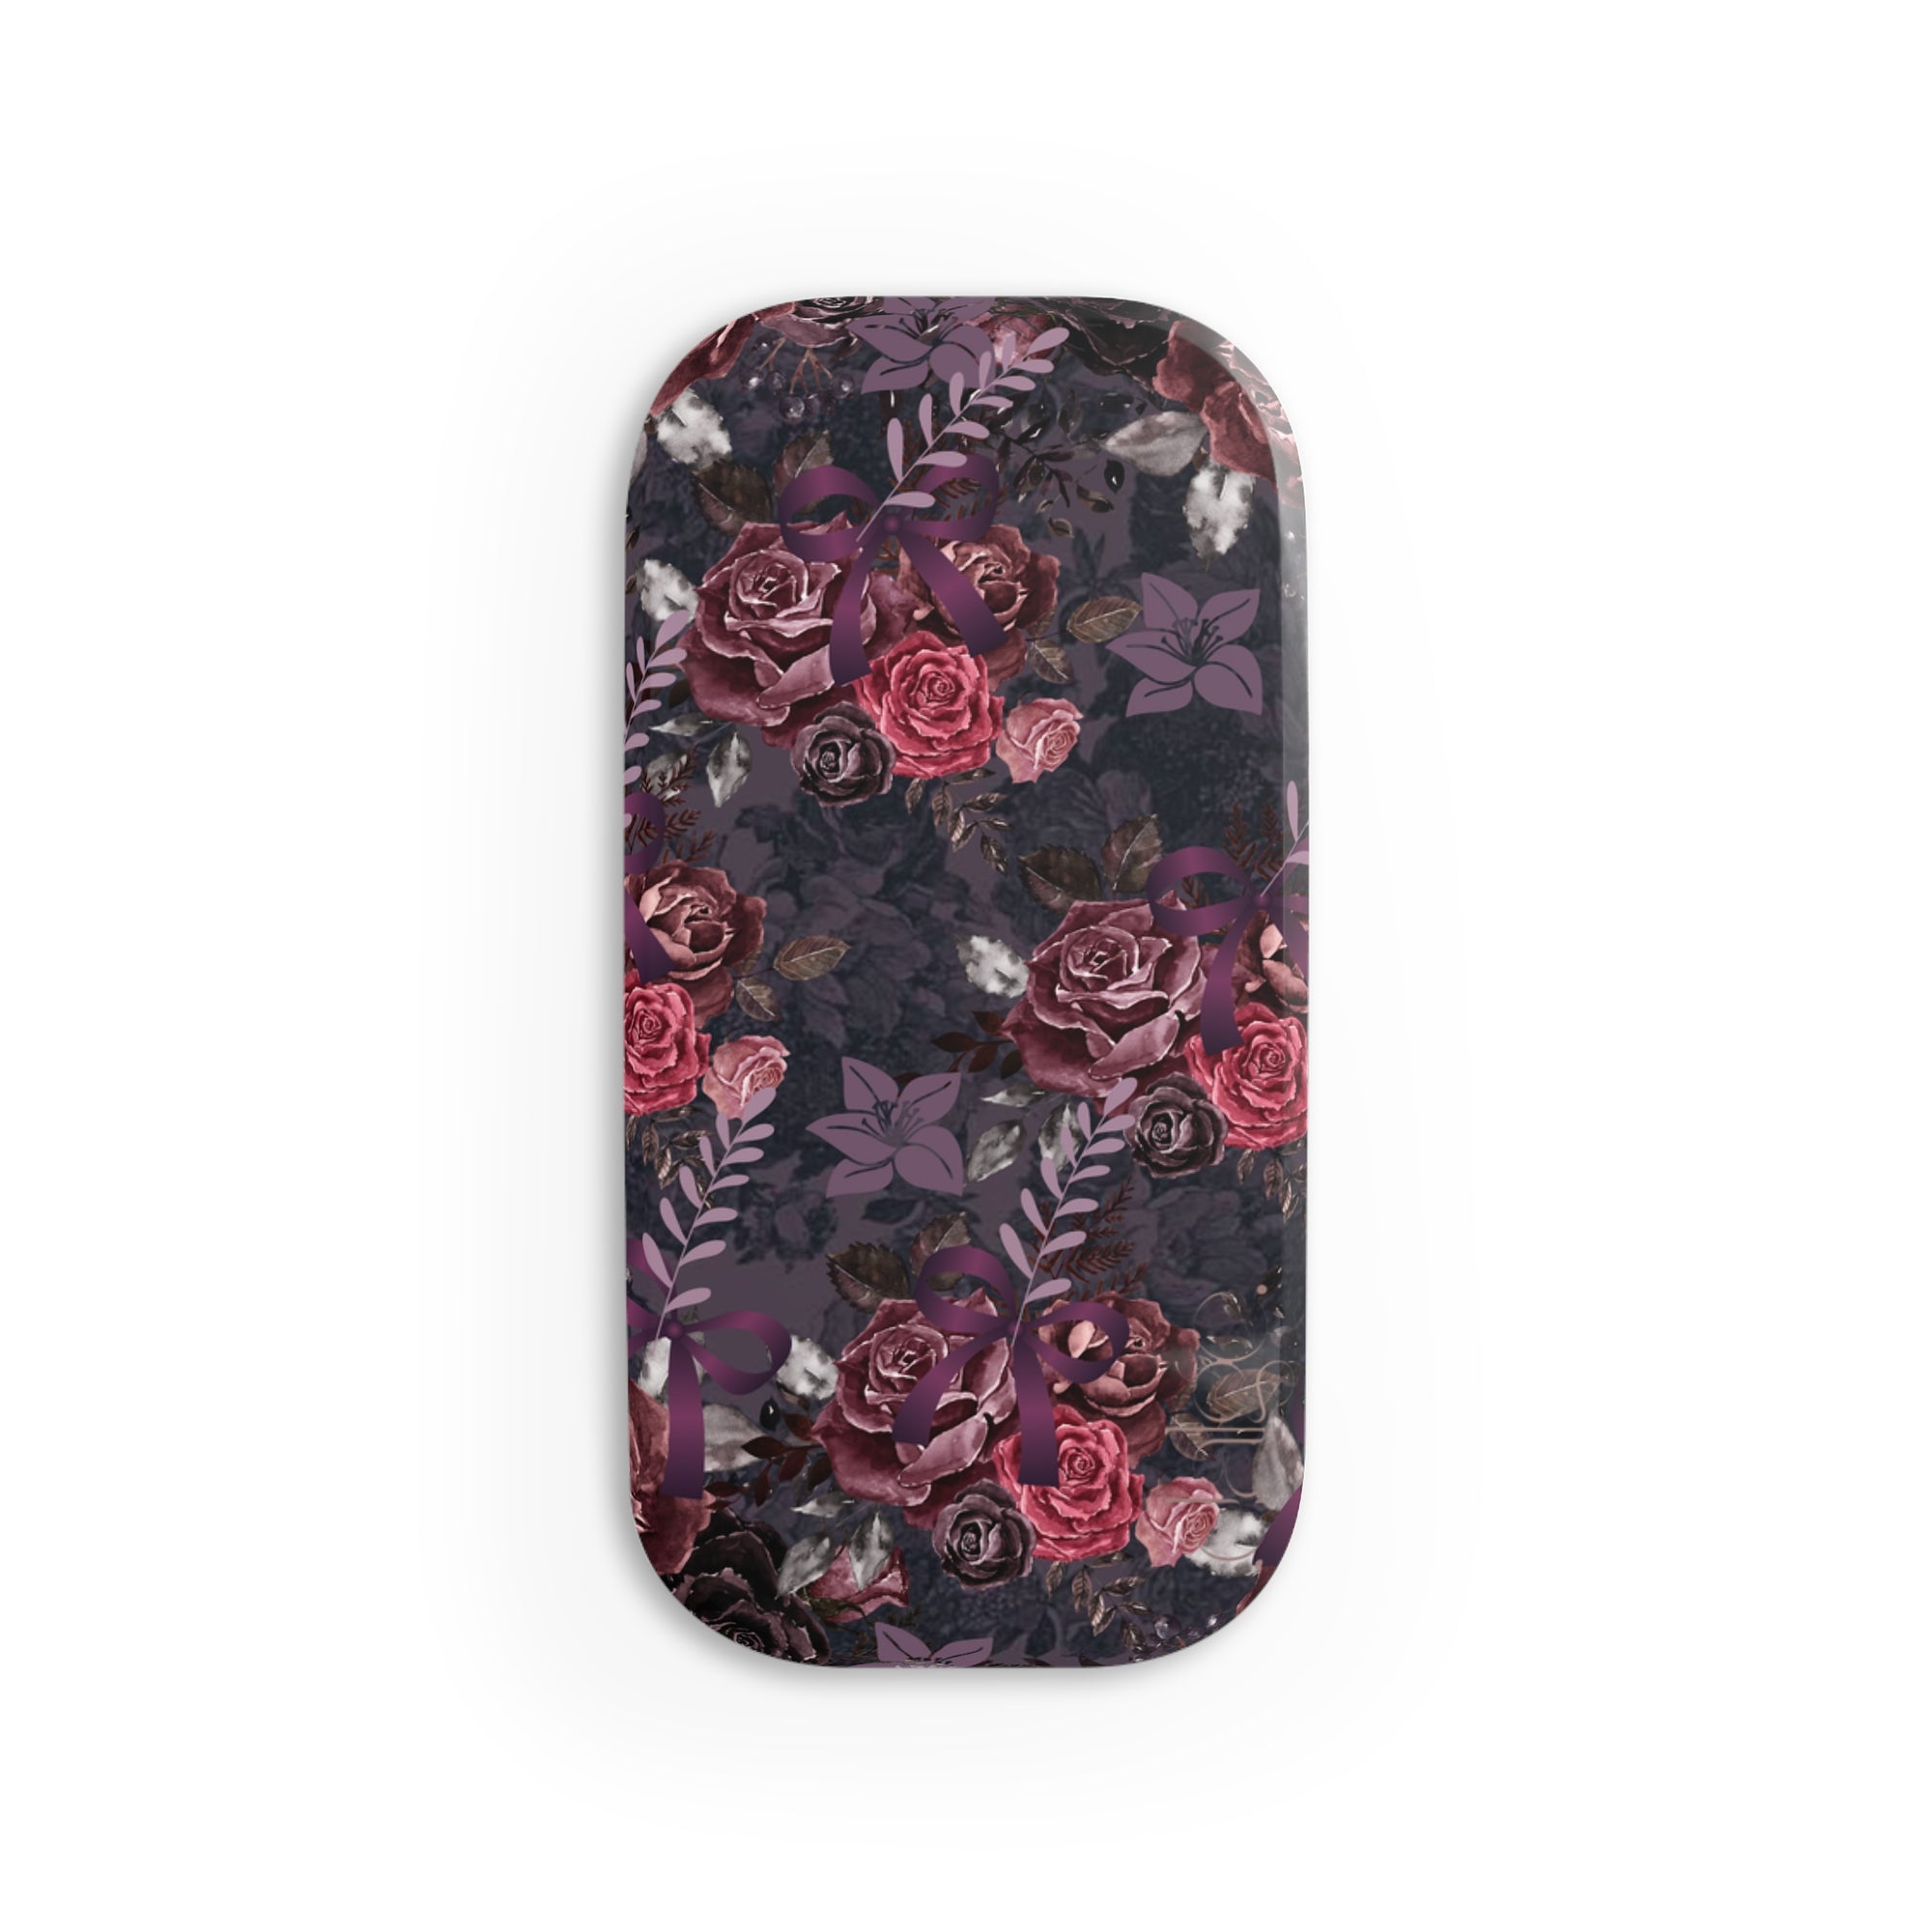 Dark Floral Phone Click-On Grip, Dark Floral Grip, Floral Grip, Phone Click-on, Phone Click-on grip, dark Click-on, Floral Grip-Accessories-Dalge